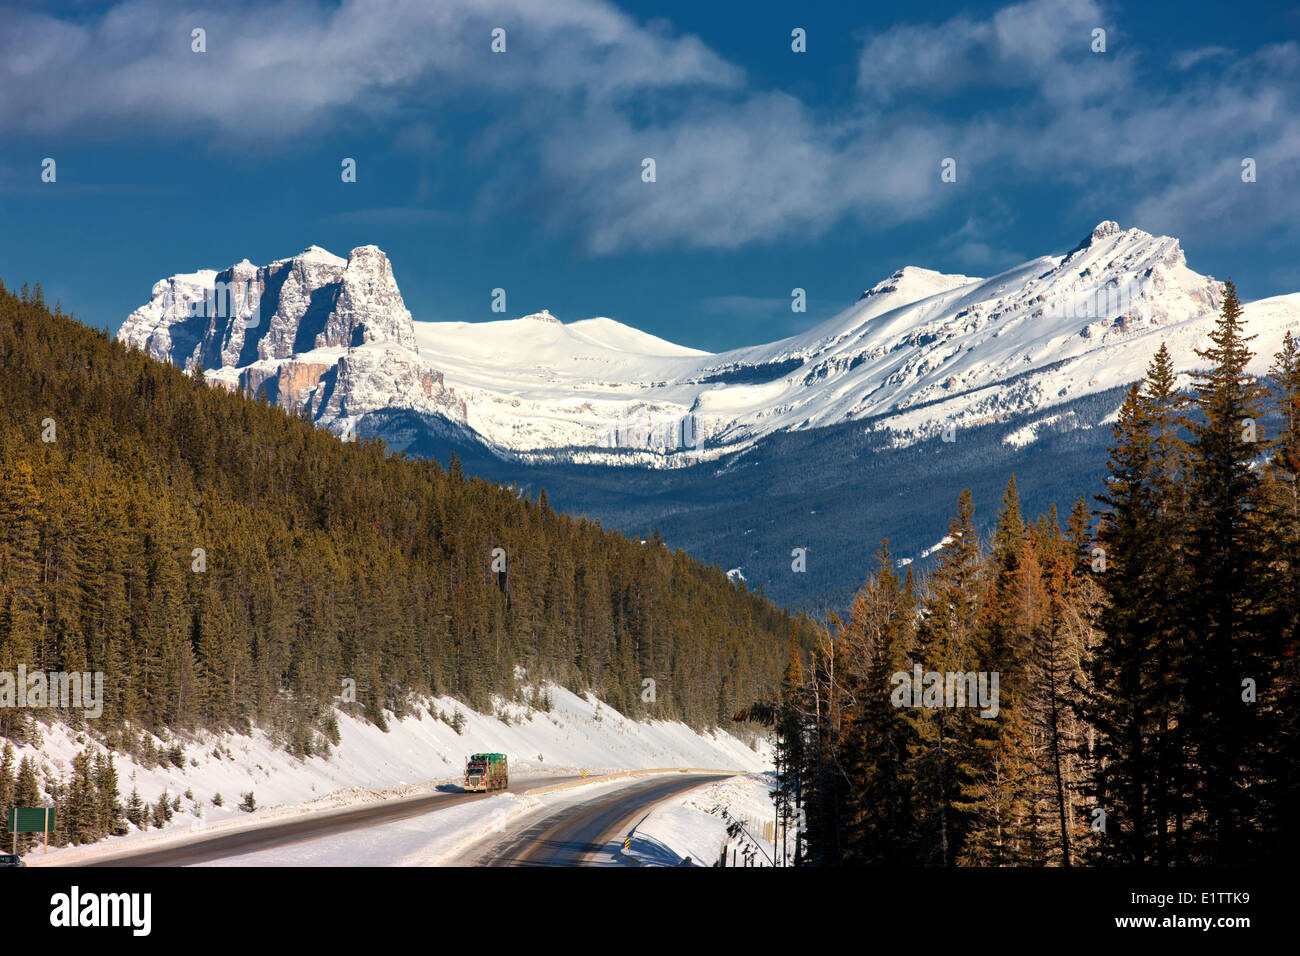 Transport-LKW am Trans-Canada Highway mit Schloss Berg im Hintergrund, Banff Nationalpark, Alberta, Kanada Stockfoto